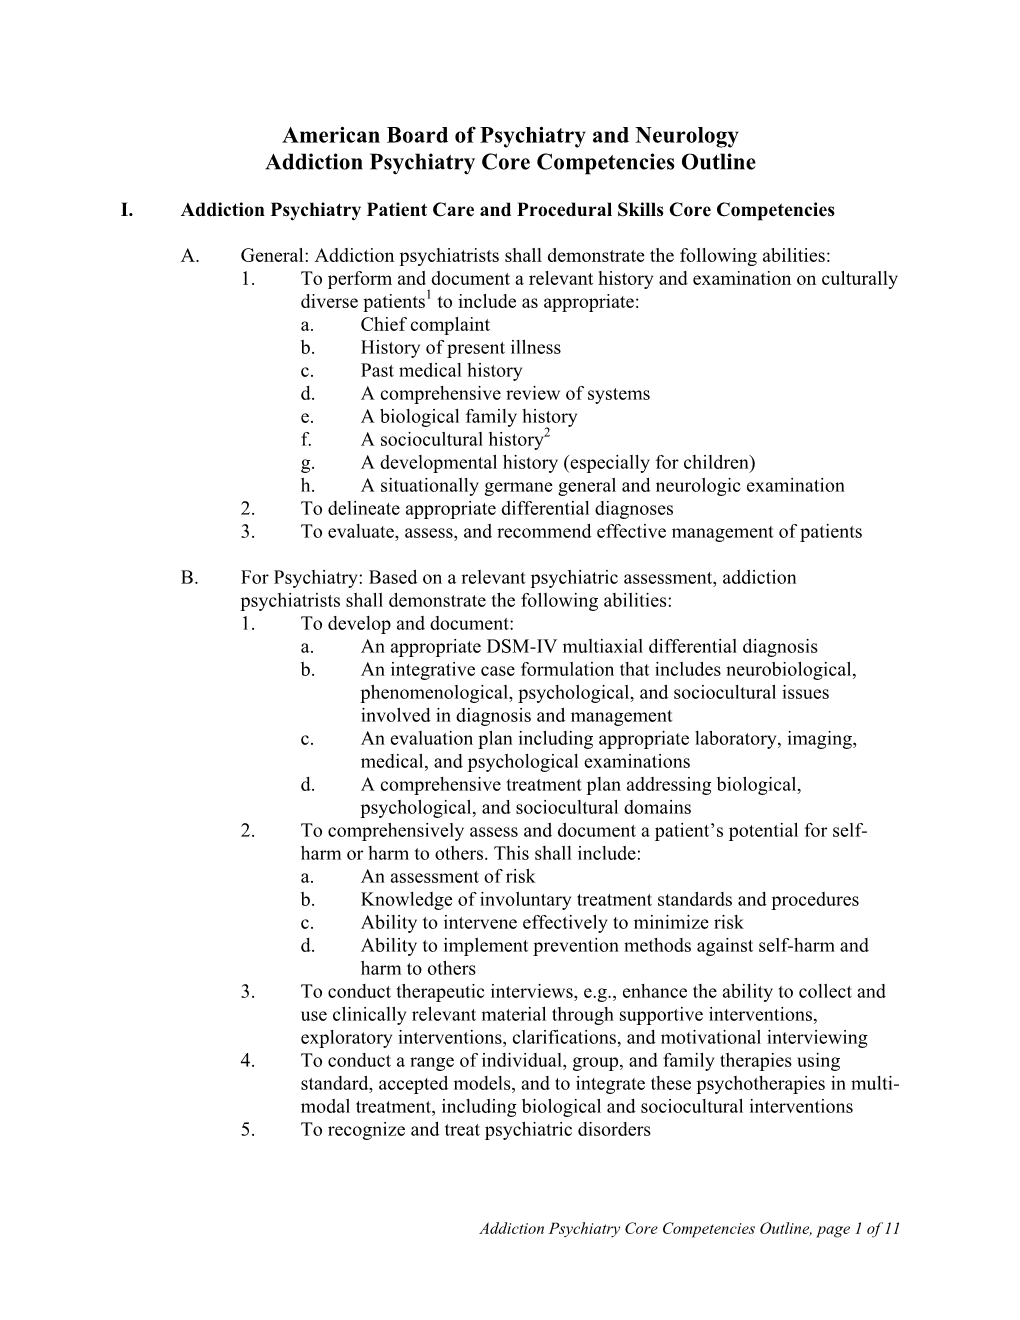 ABPN Addiction Psychiatry Core Competencies Outline